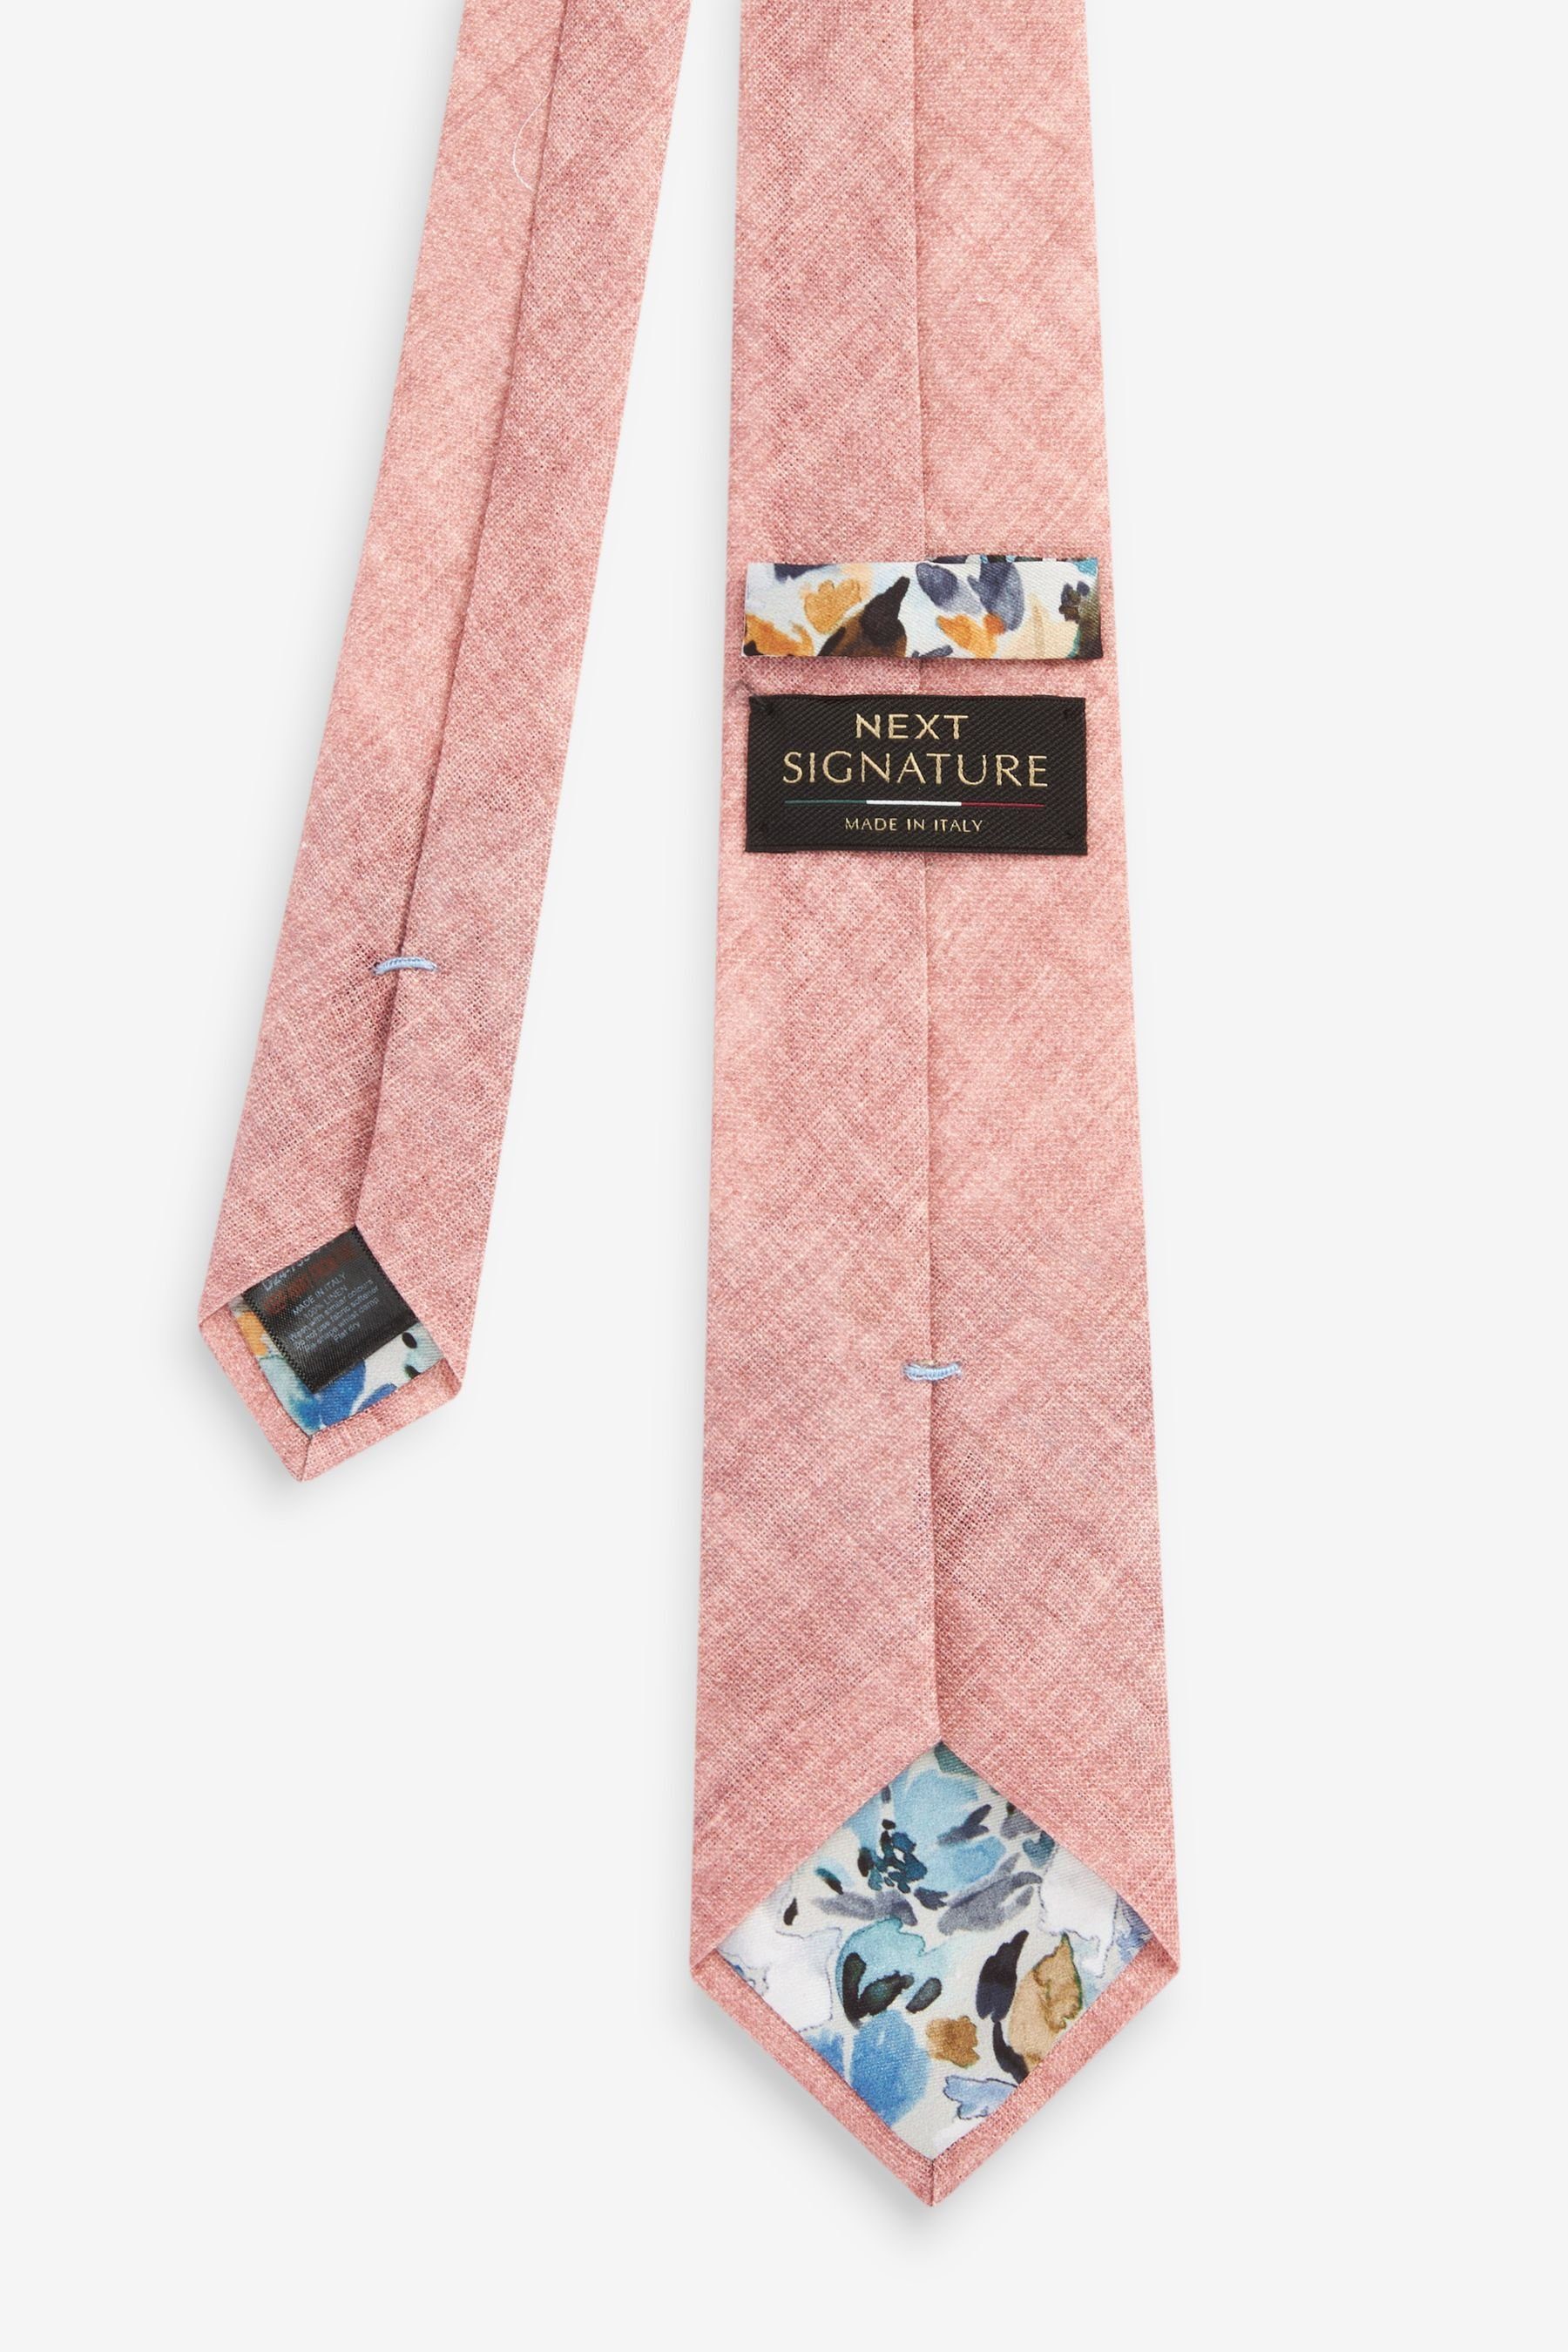 Krawatte Signature (1-St) Leinen-Krawatte Italy Next Pink in Made